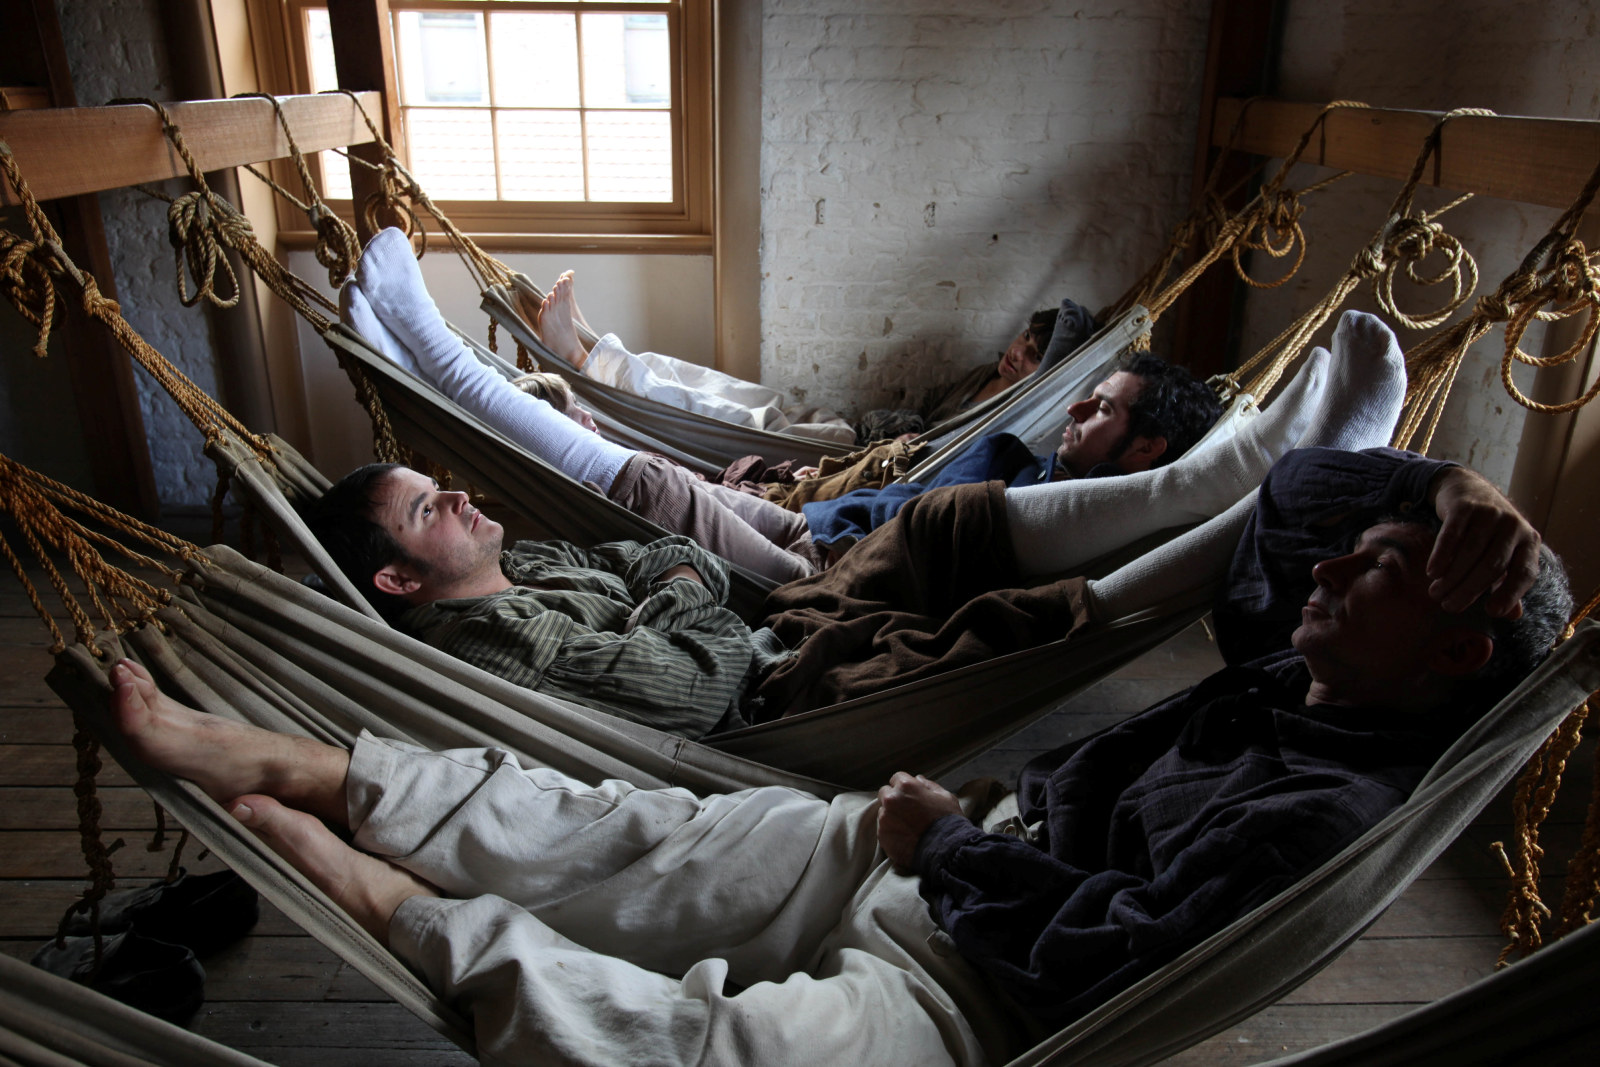 Reenactment of 5 convicts lying in hammocks